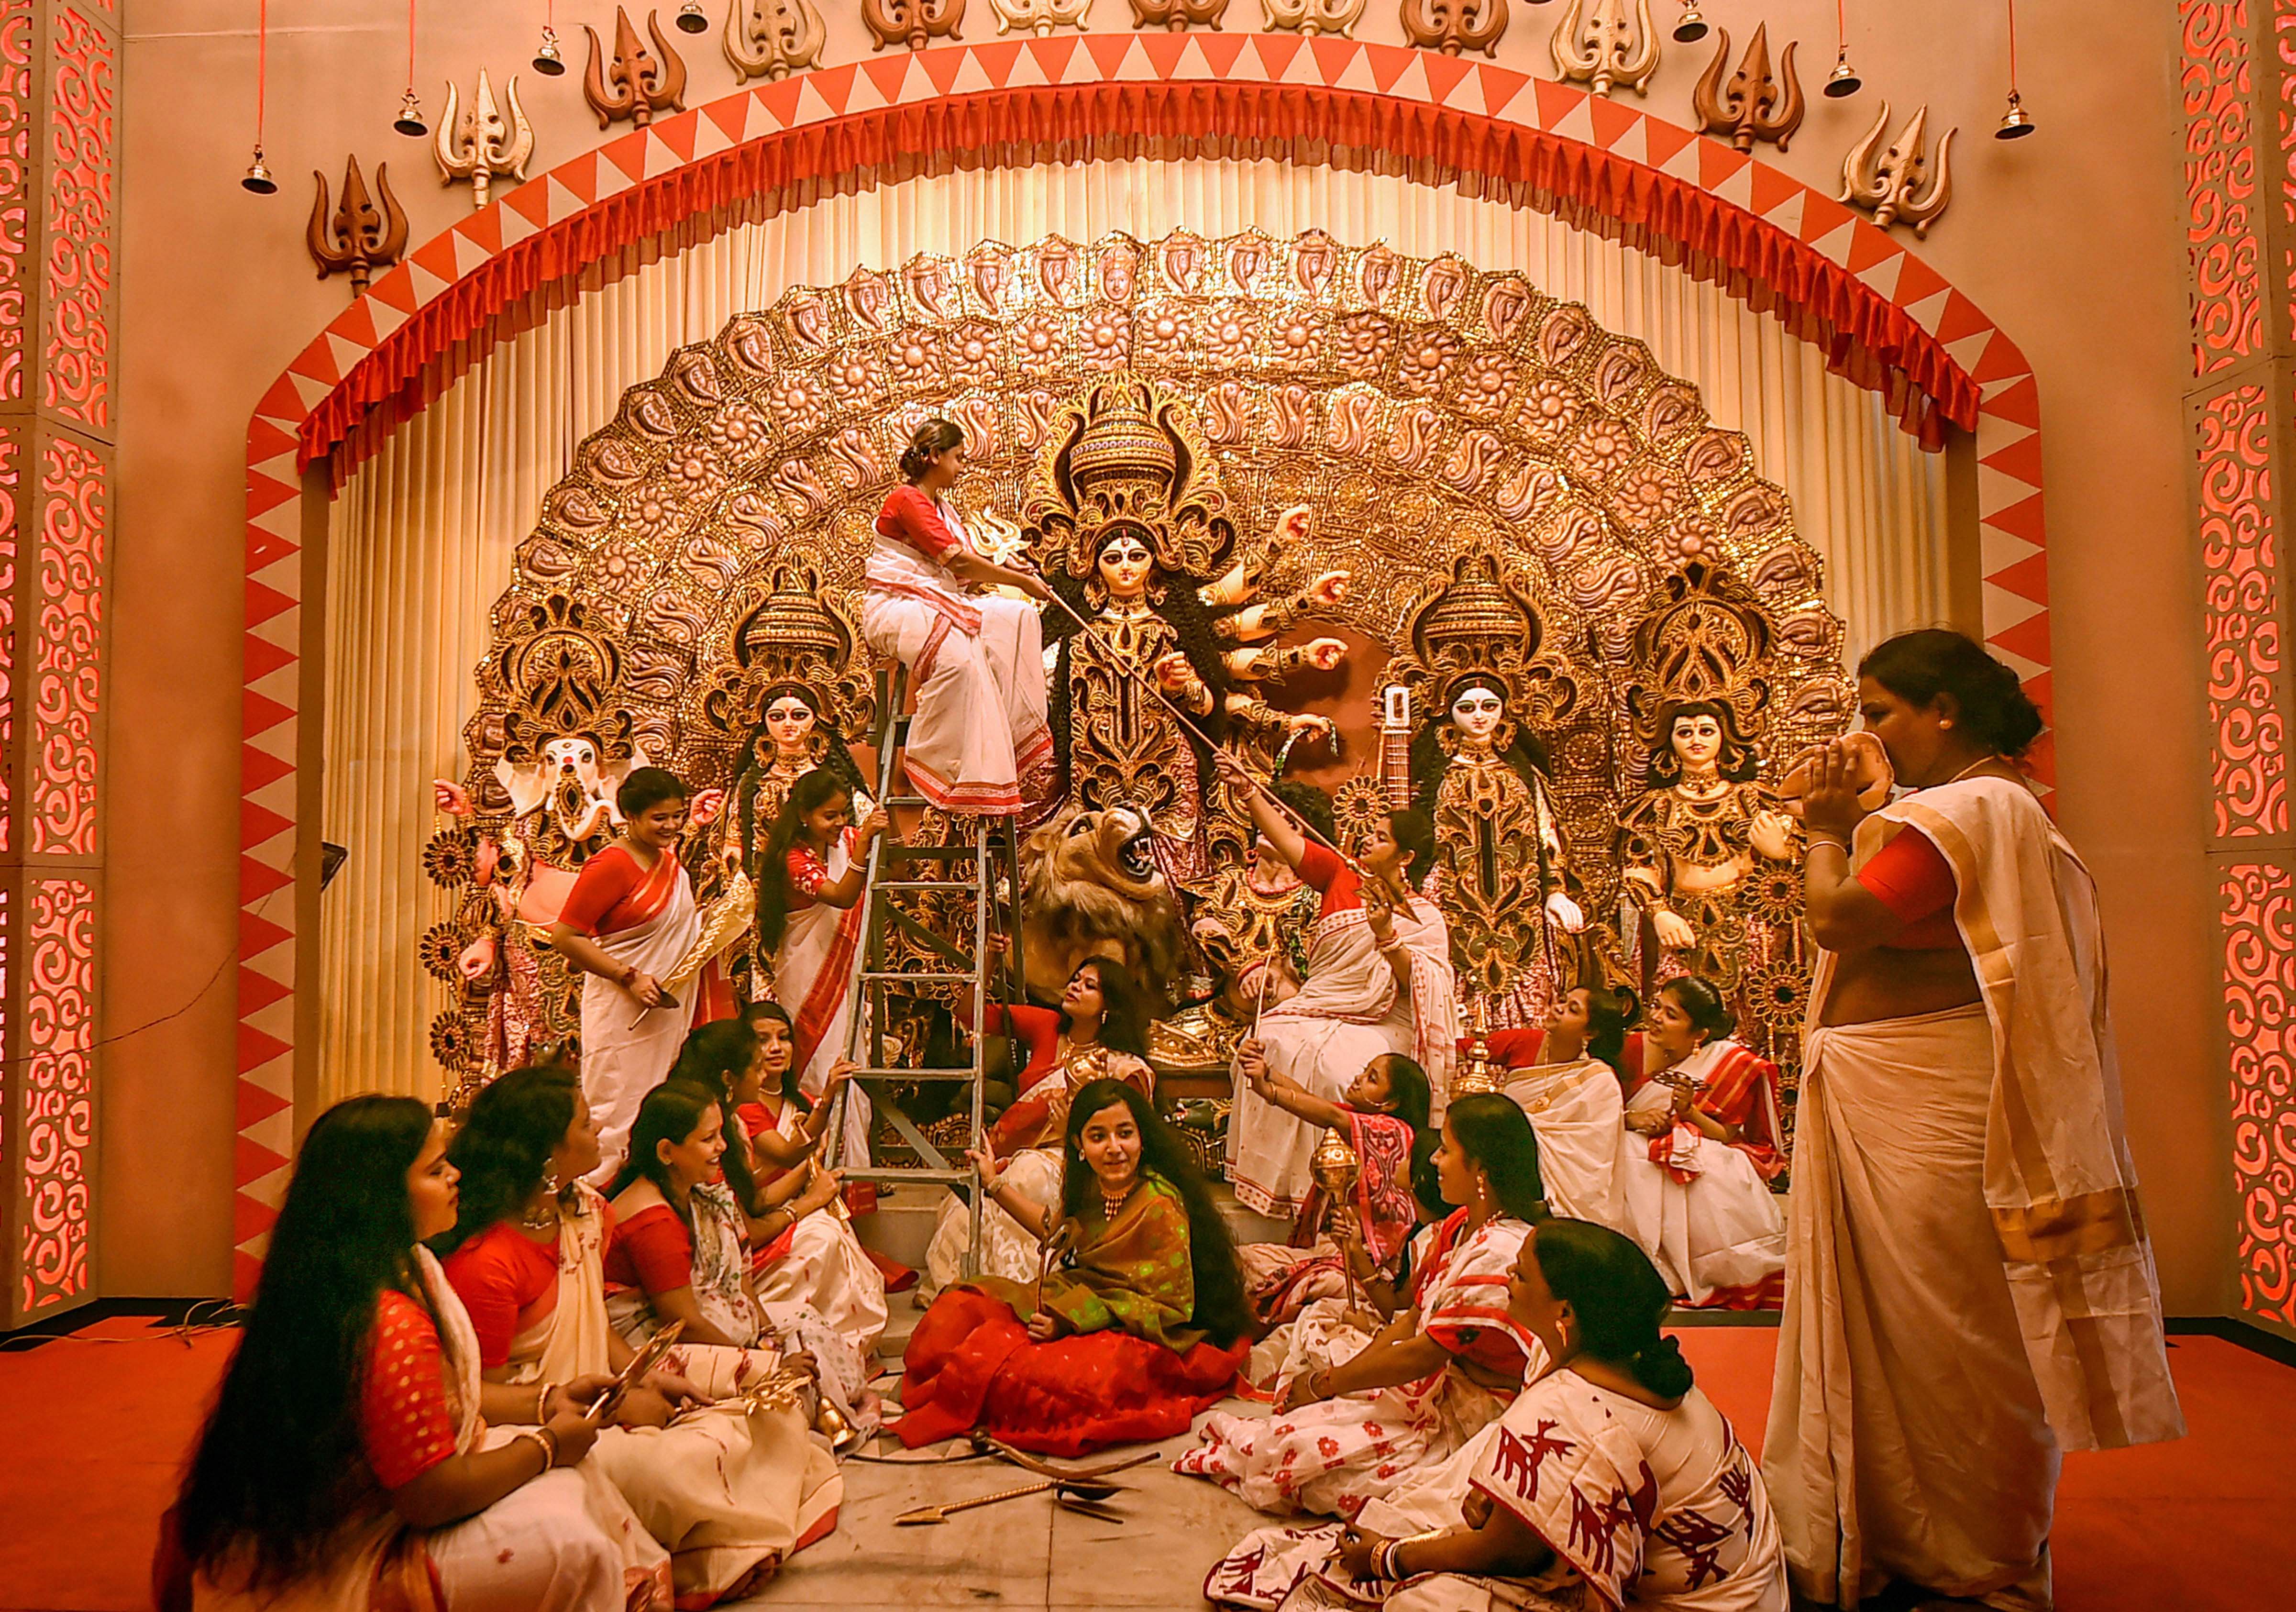 Kolkata gears up for subdued Durga Puja celebrations